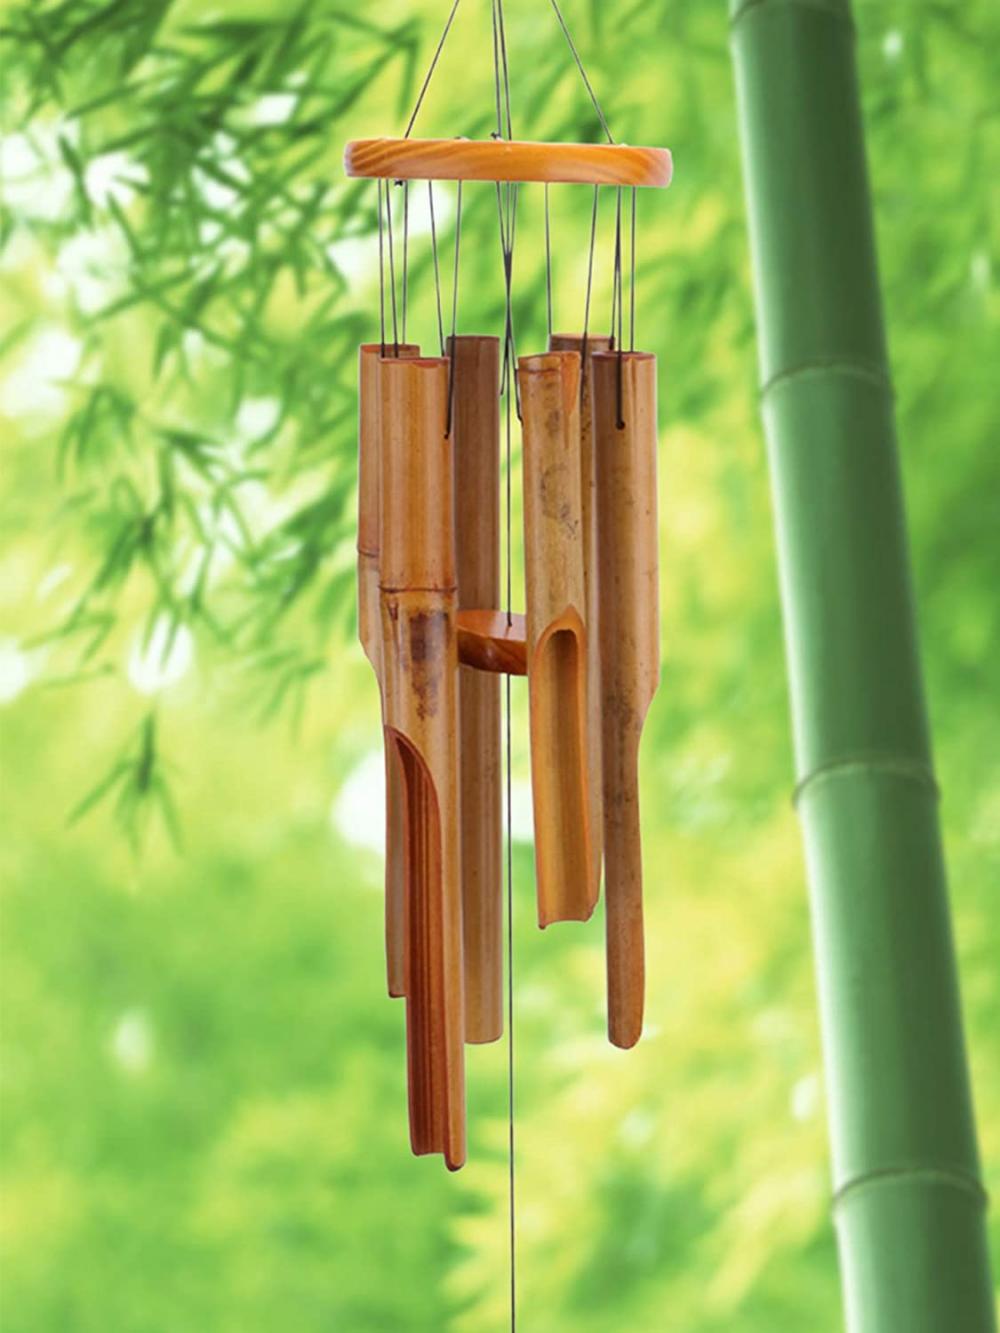 Lonceng angin bambu dengan nada dalam yang luar biasa